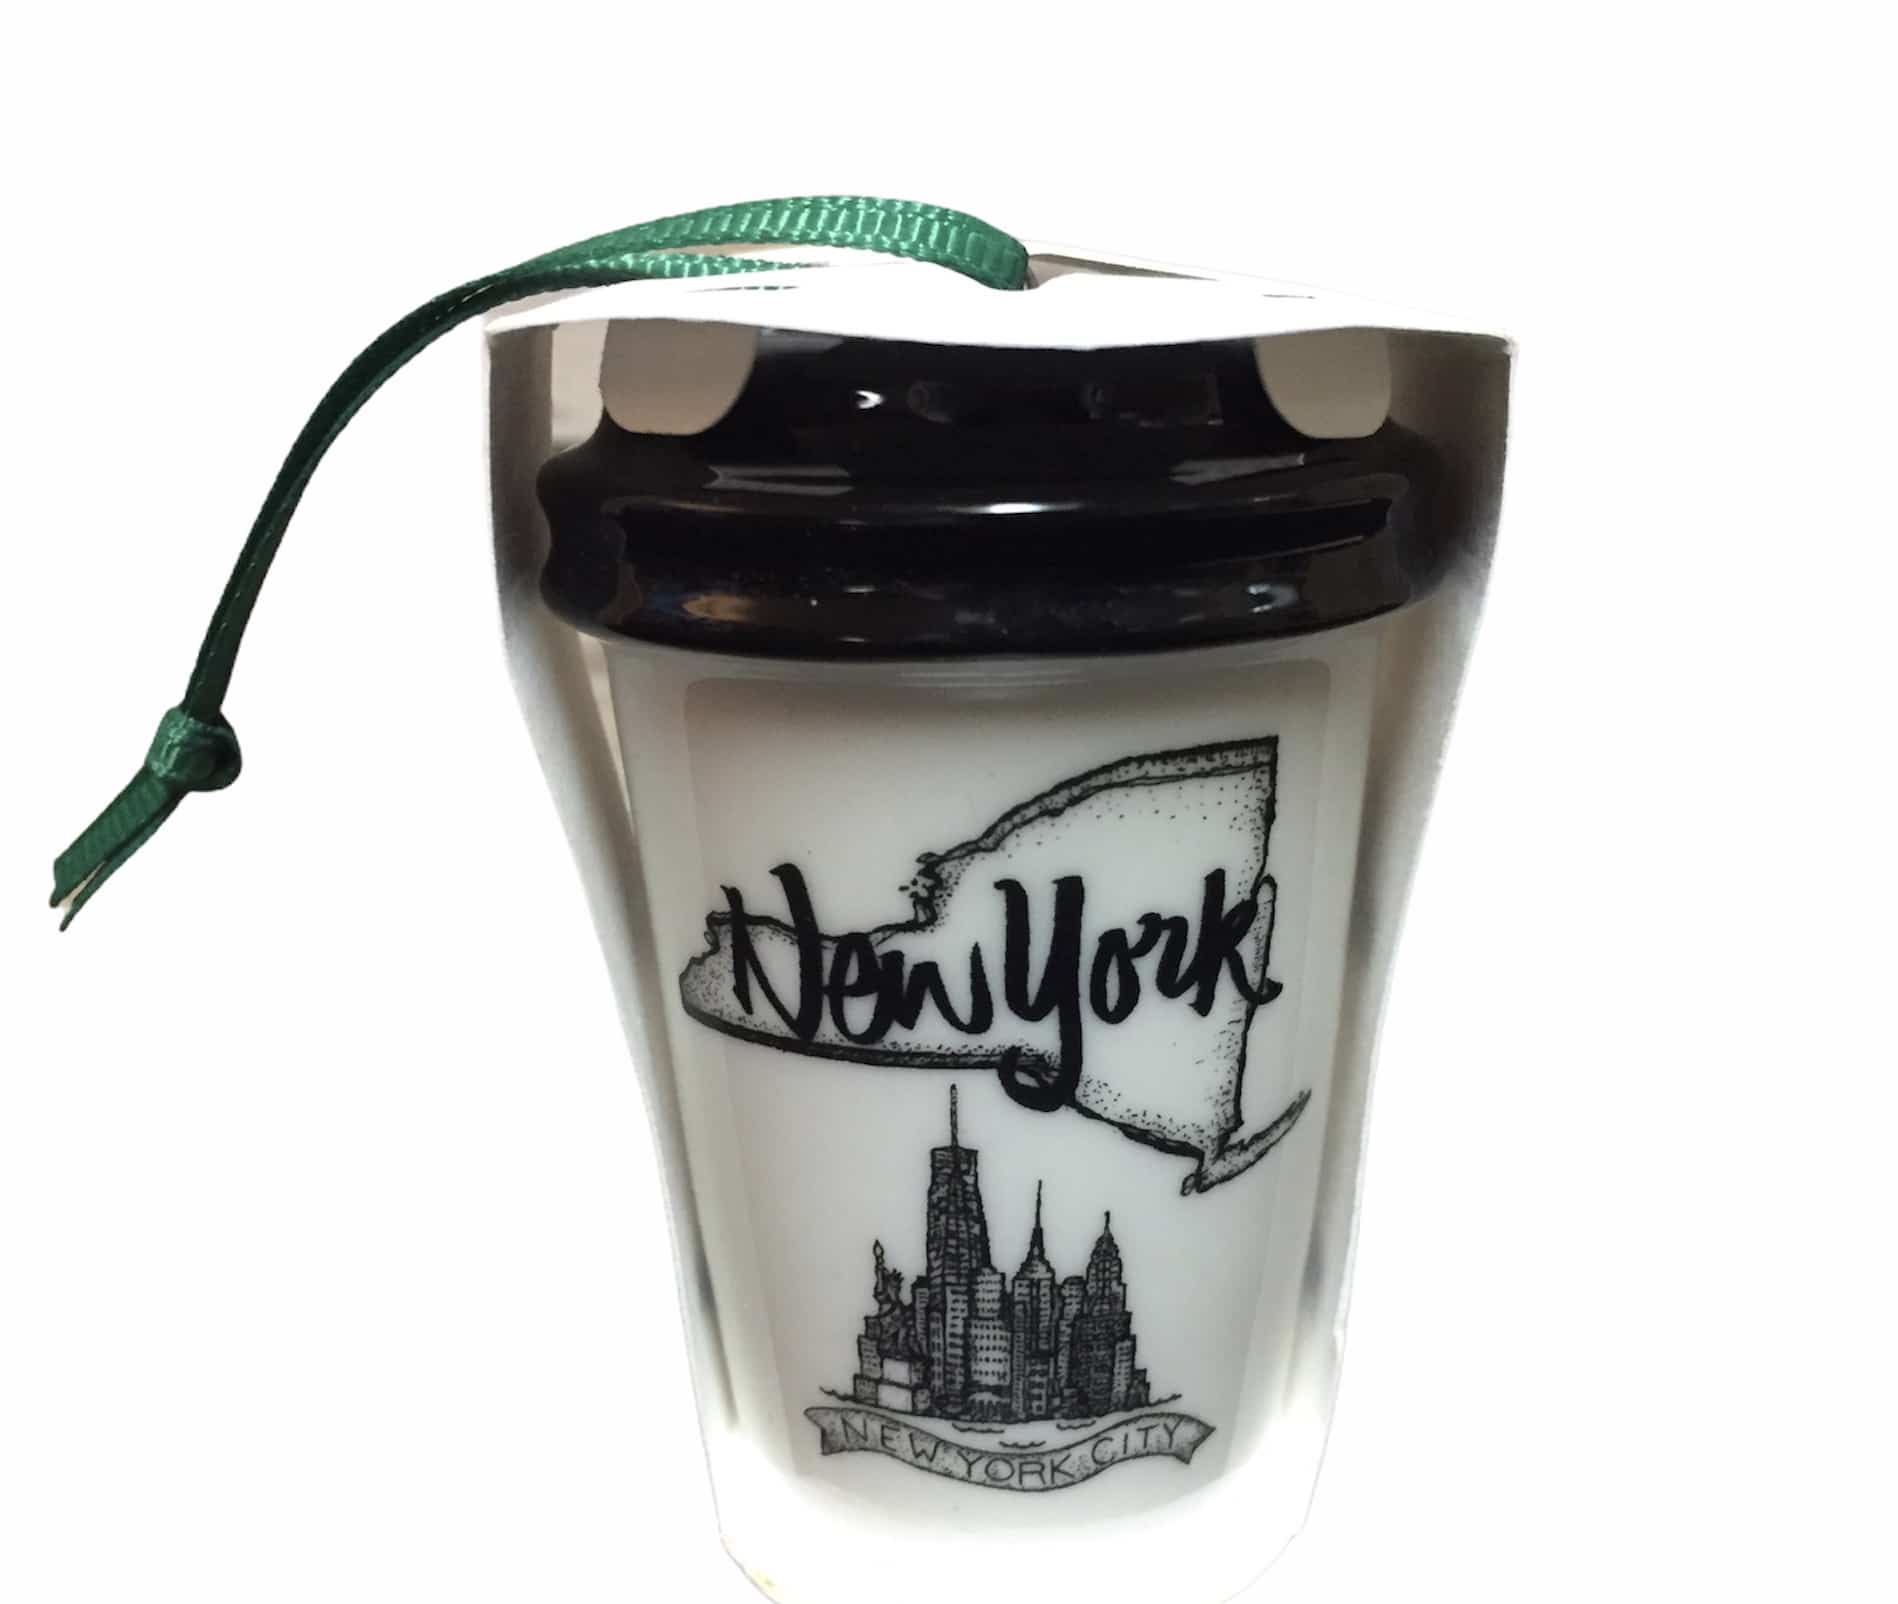 https://www.prairiegrit.com/wp-content/uploads/2020/10/new-york-starbucks-to-go-cup-ornament.jpeg